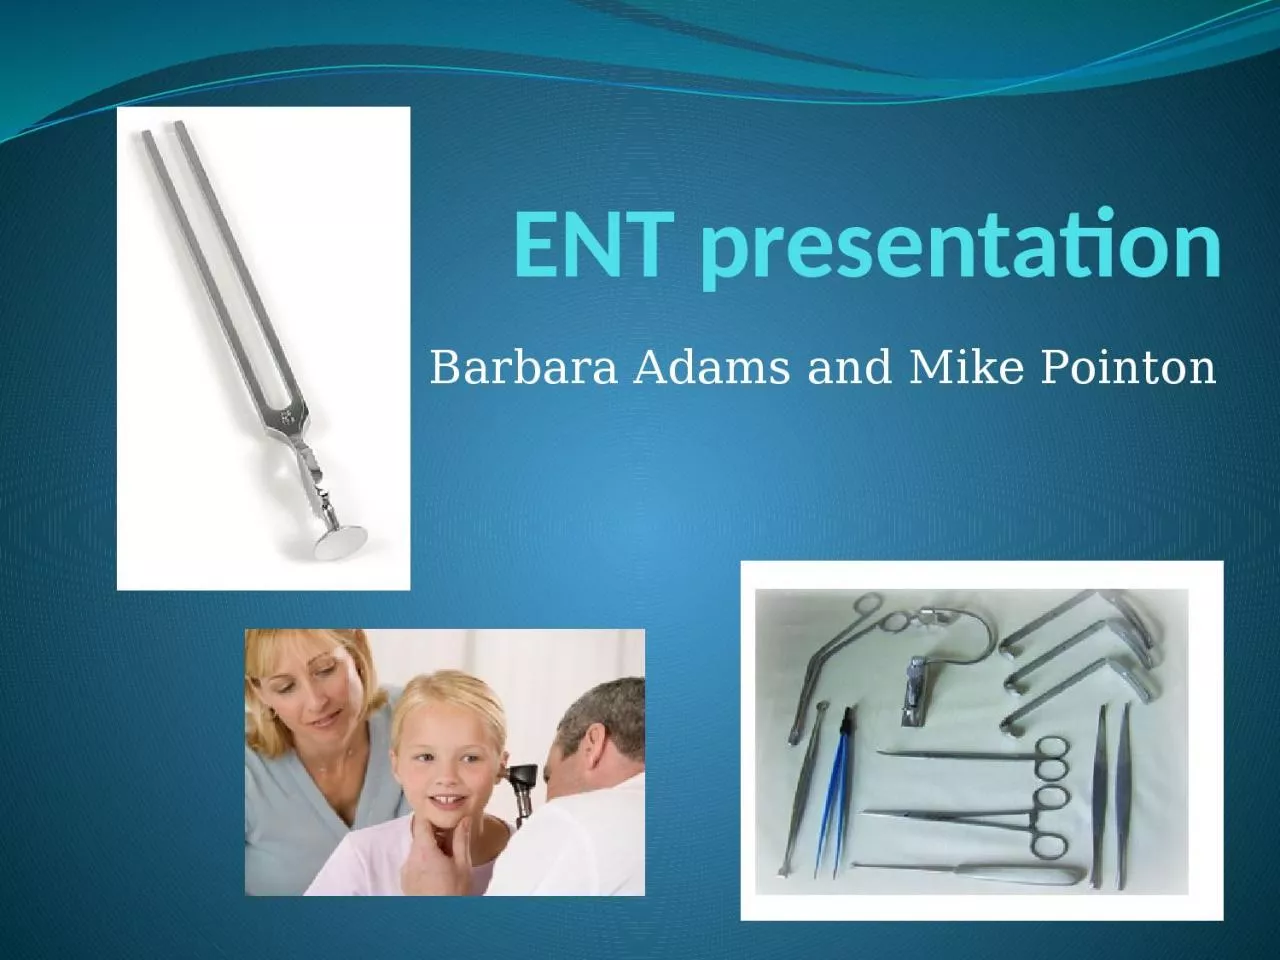 ENT presentation Barbara Adams and Mike